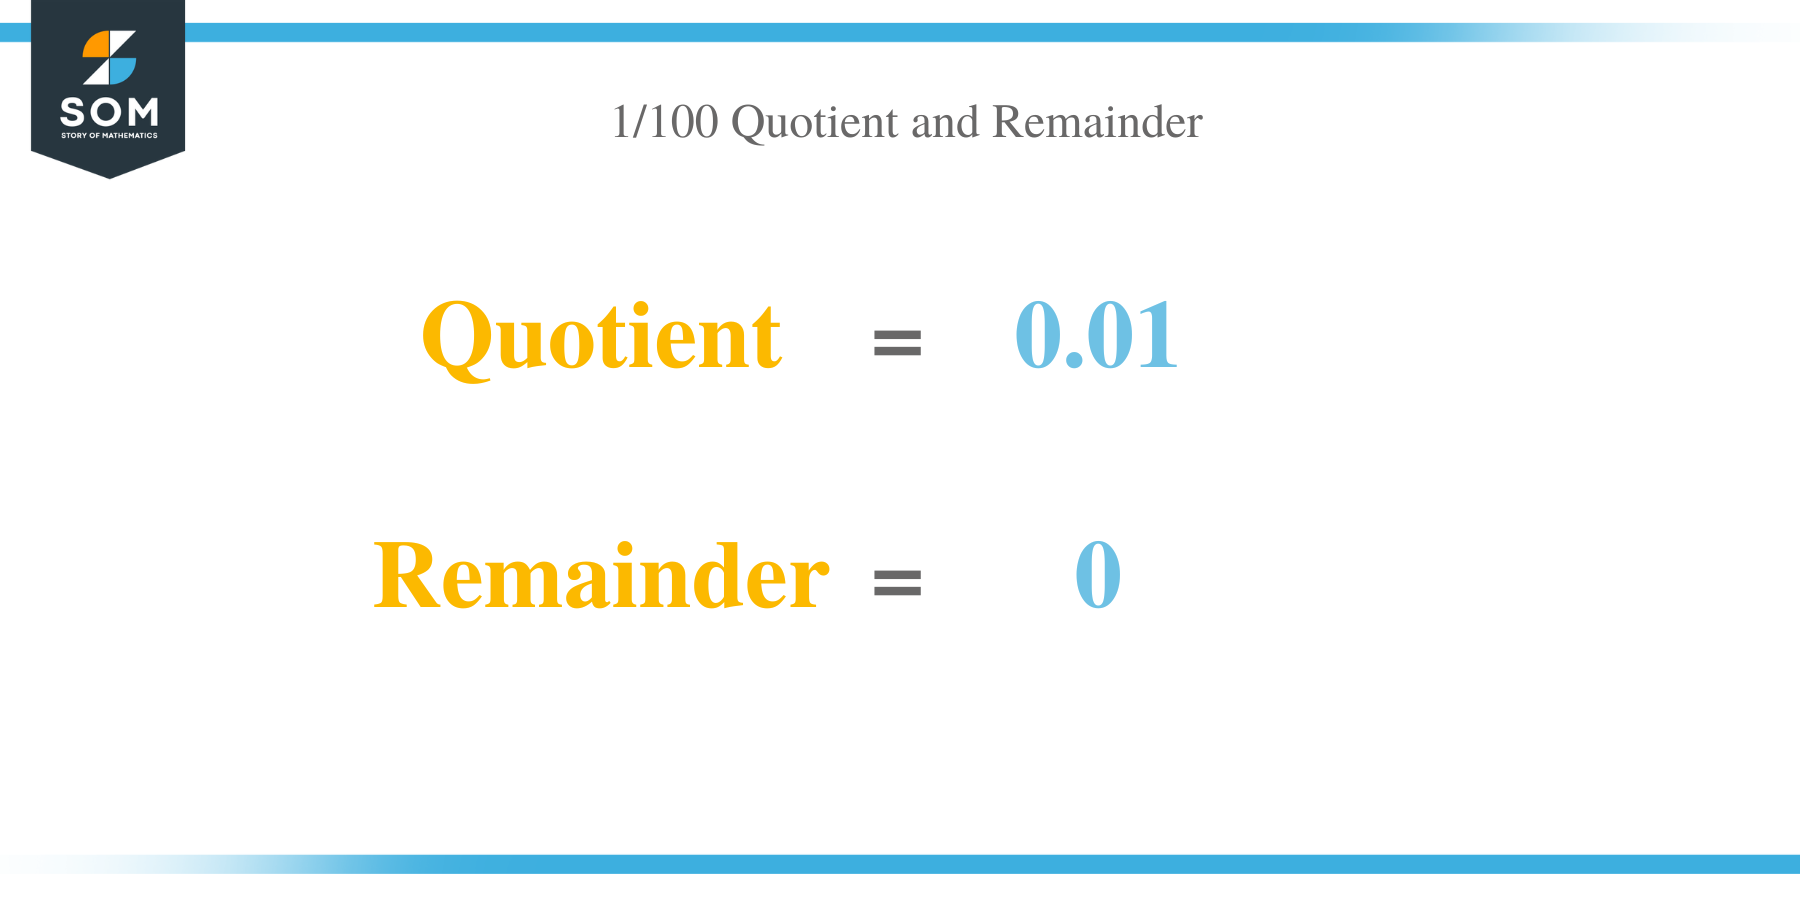 Quotient and remainder of 1 per 100